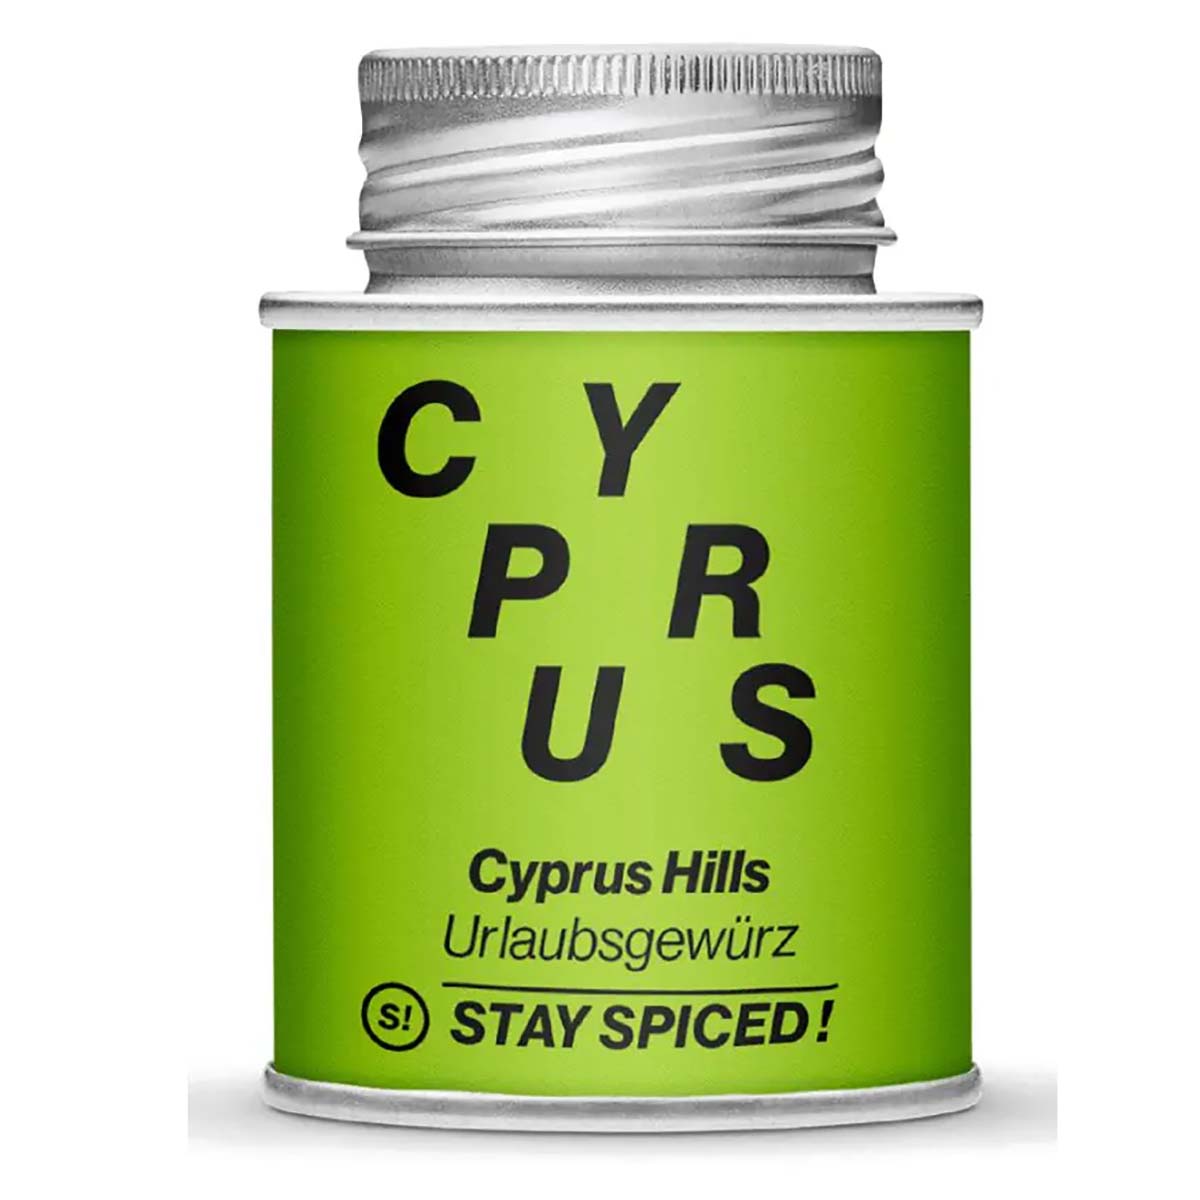 STAY SPICED ! Cyprus Hills - Urlaubsgewürz | 60 g